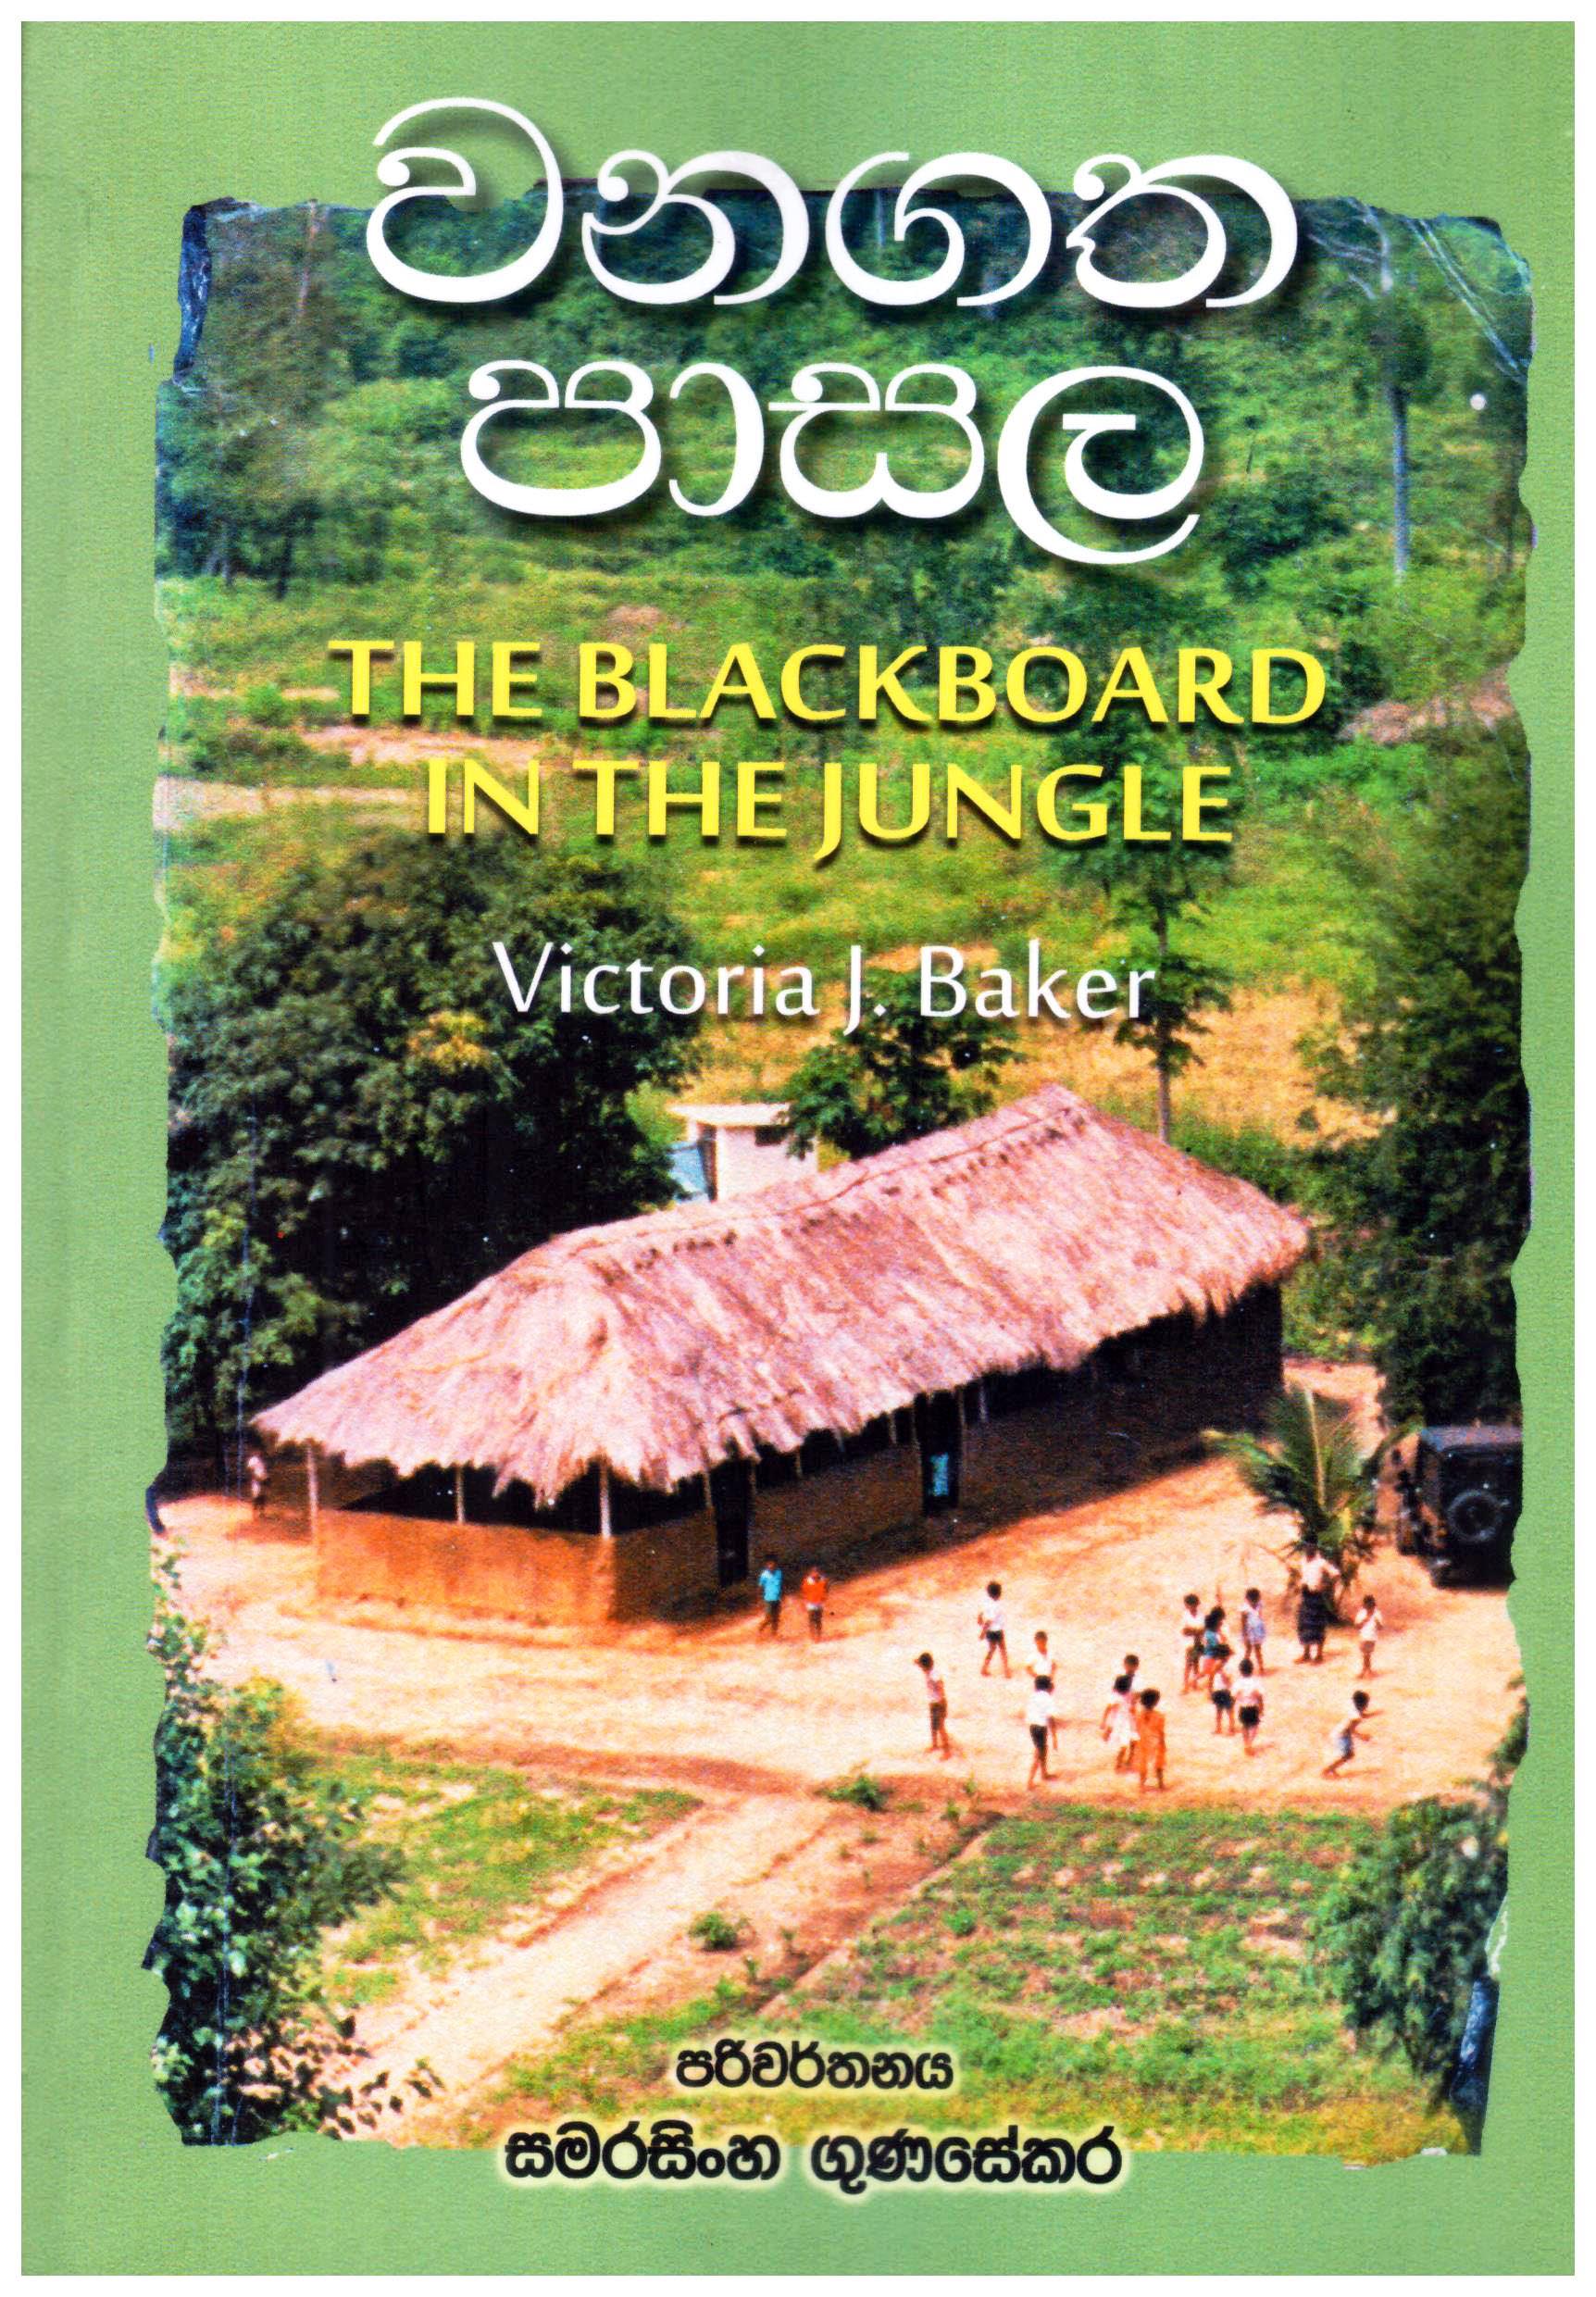 Wanagatha pasala Translation of The Blackboard In The Jungle By Victoria J. Baker